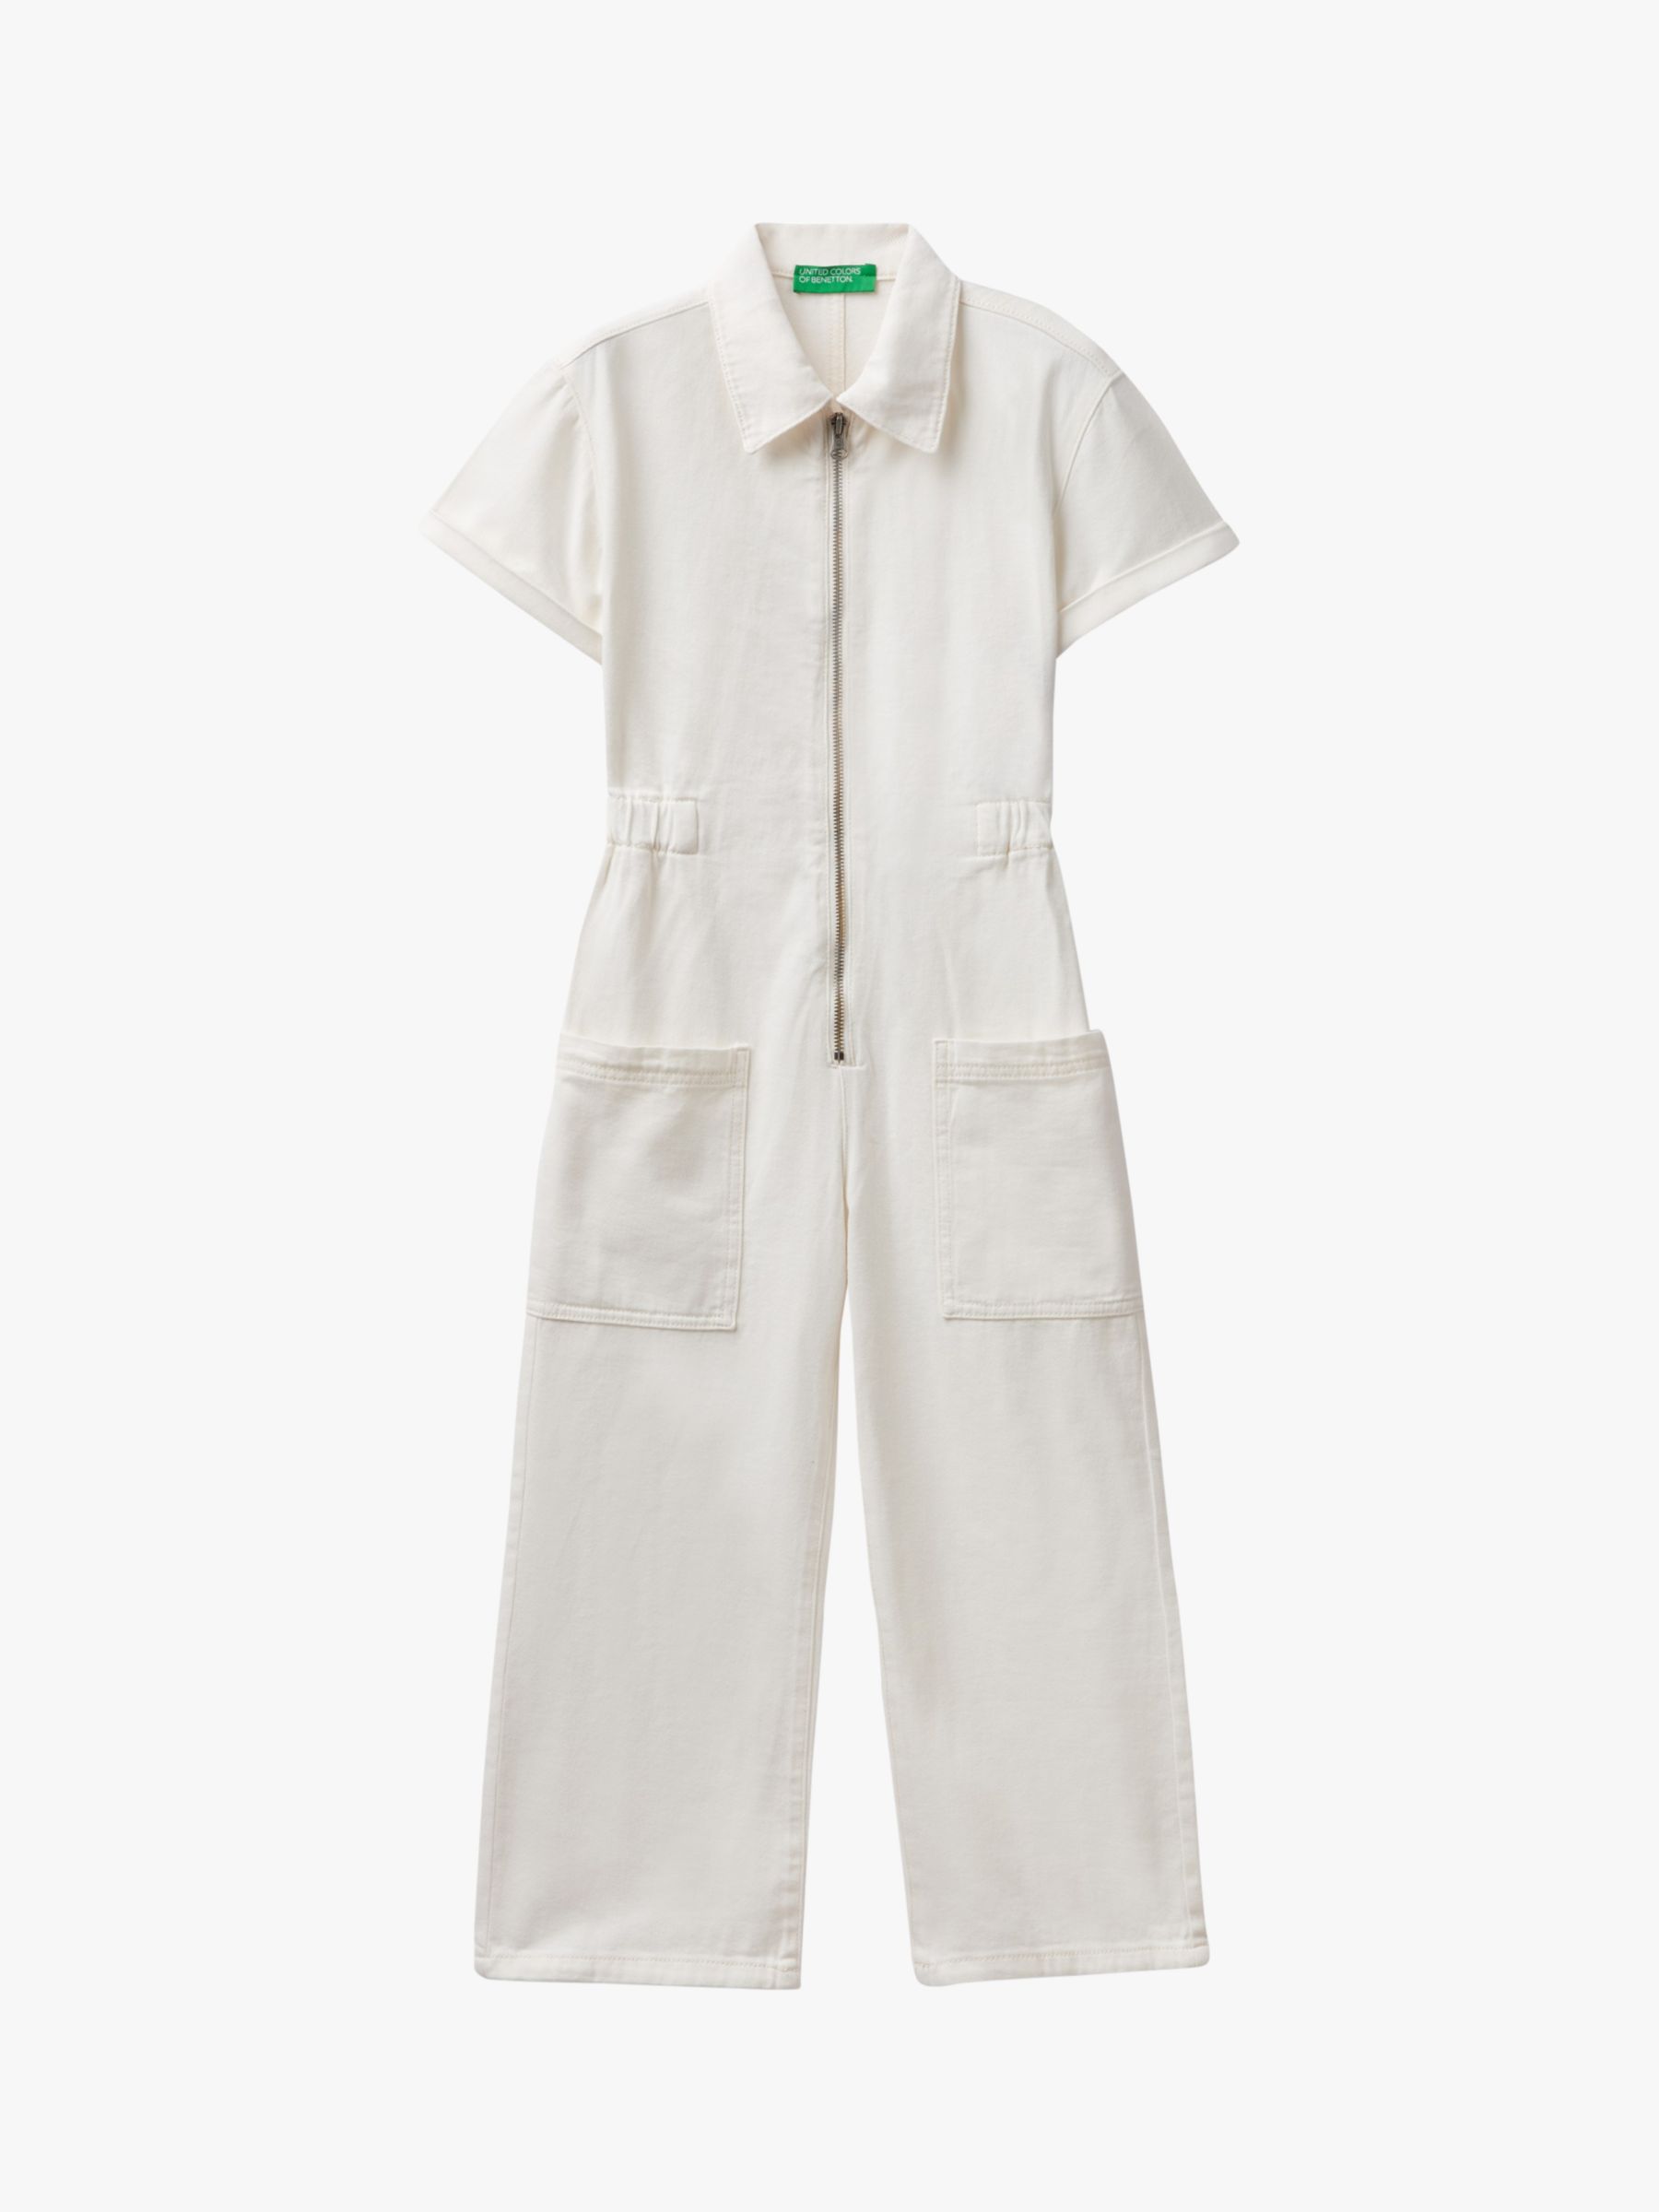 Benetton Kids' Zip Through Cargo Jumpsuit, White Cream, 6-7 years